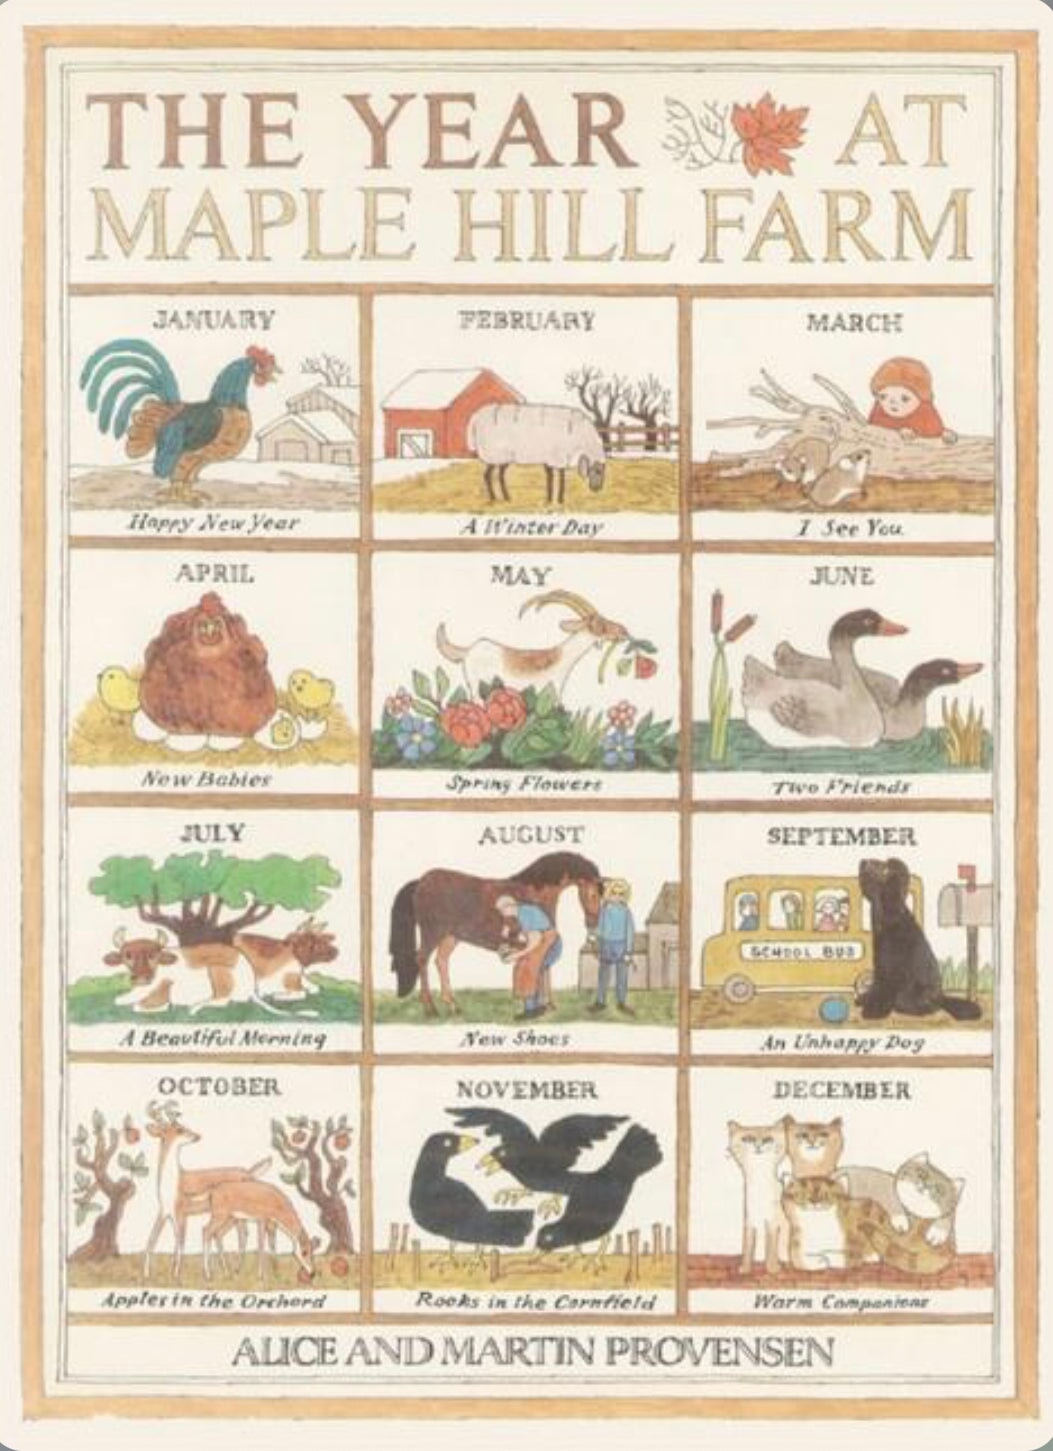 The Year at Maple Hill Farm, Seasons on a Farm by Alice and Martin Provensen - Alder & Alouette